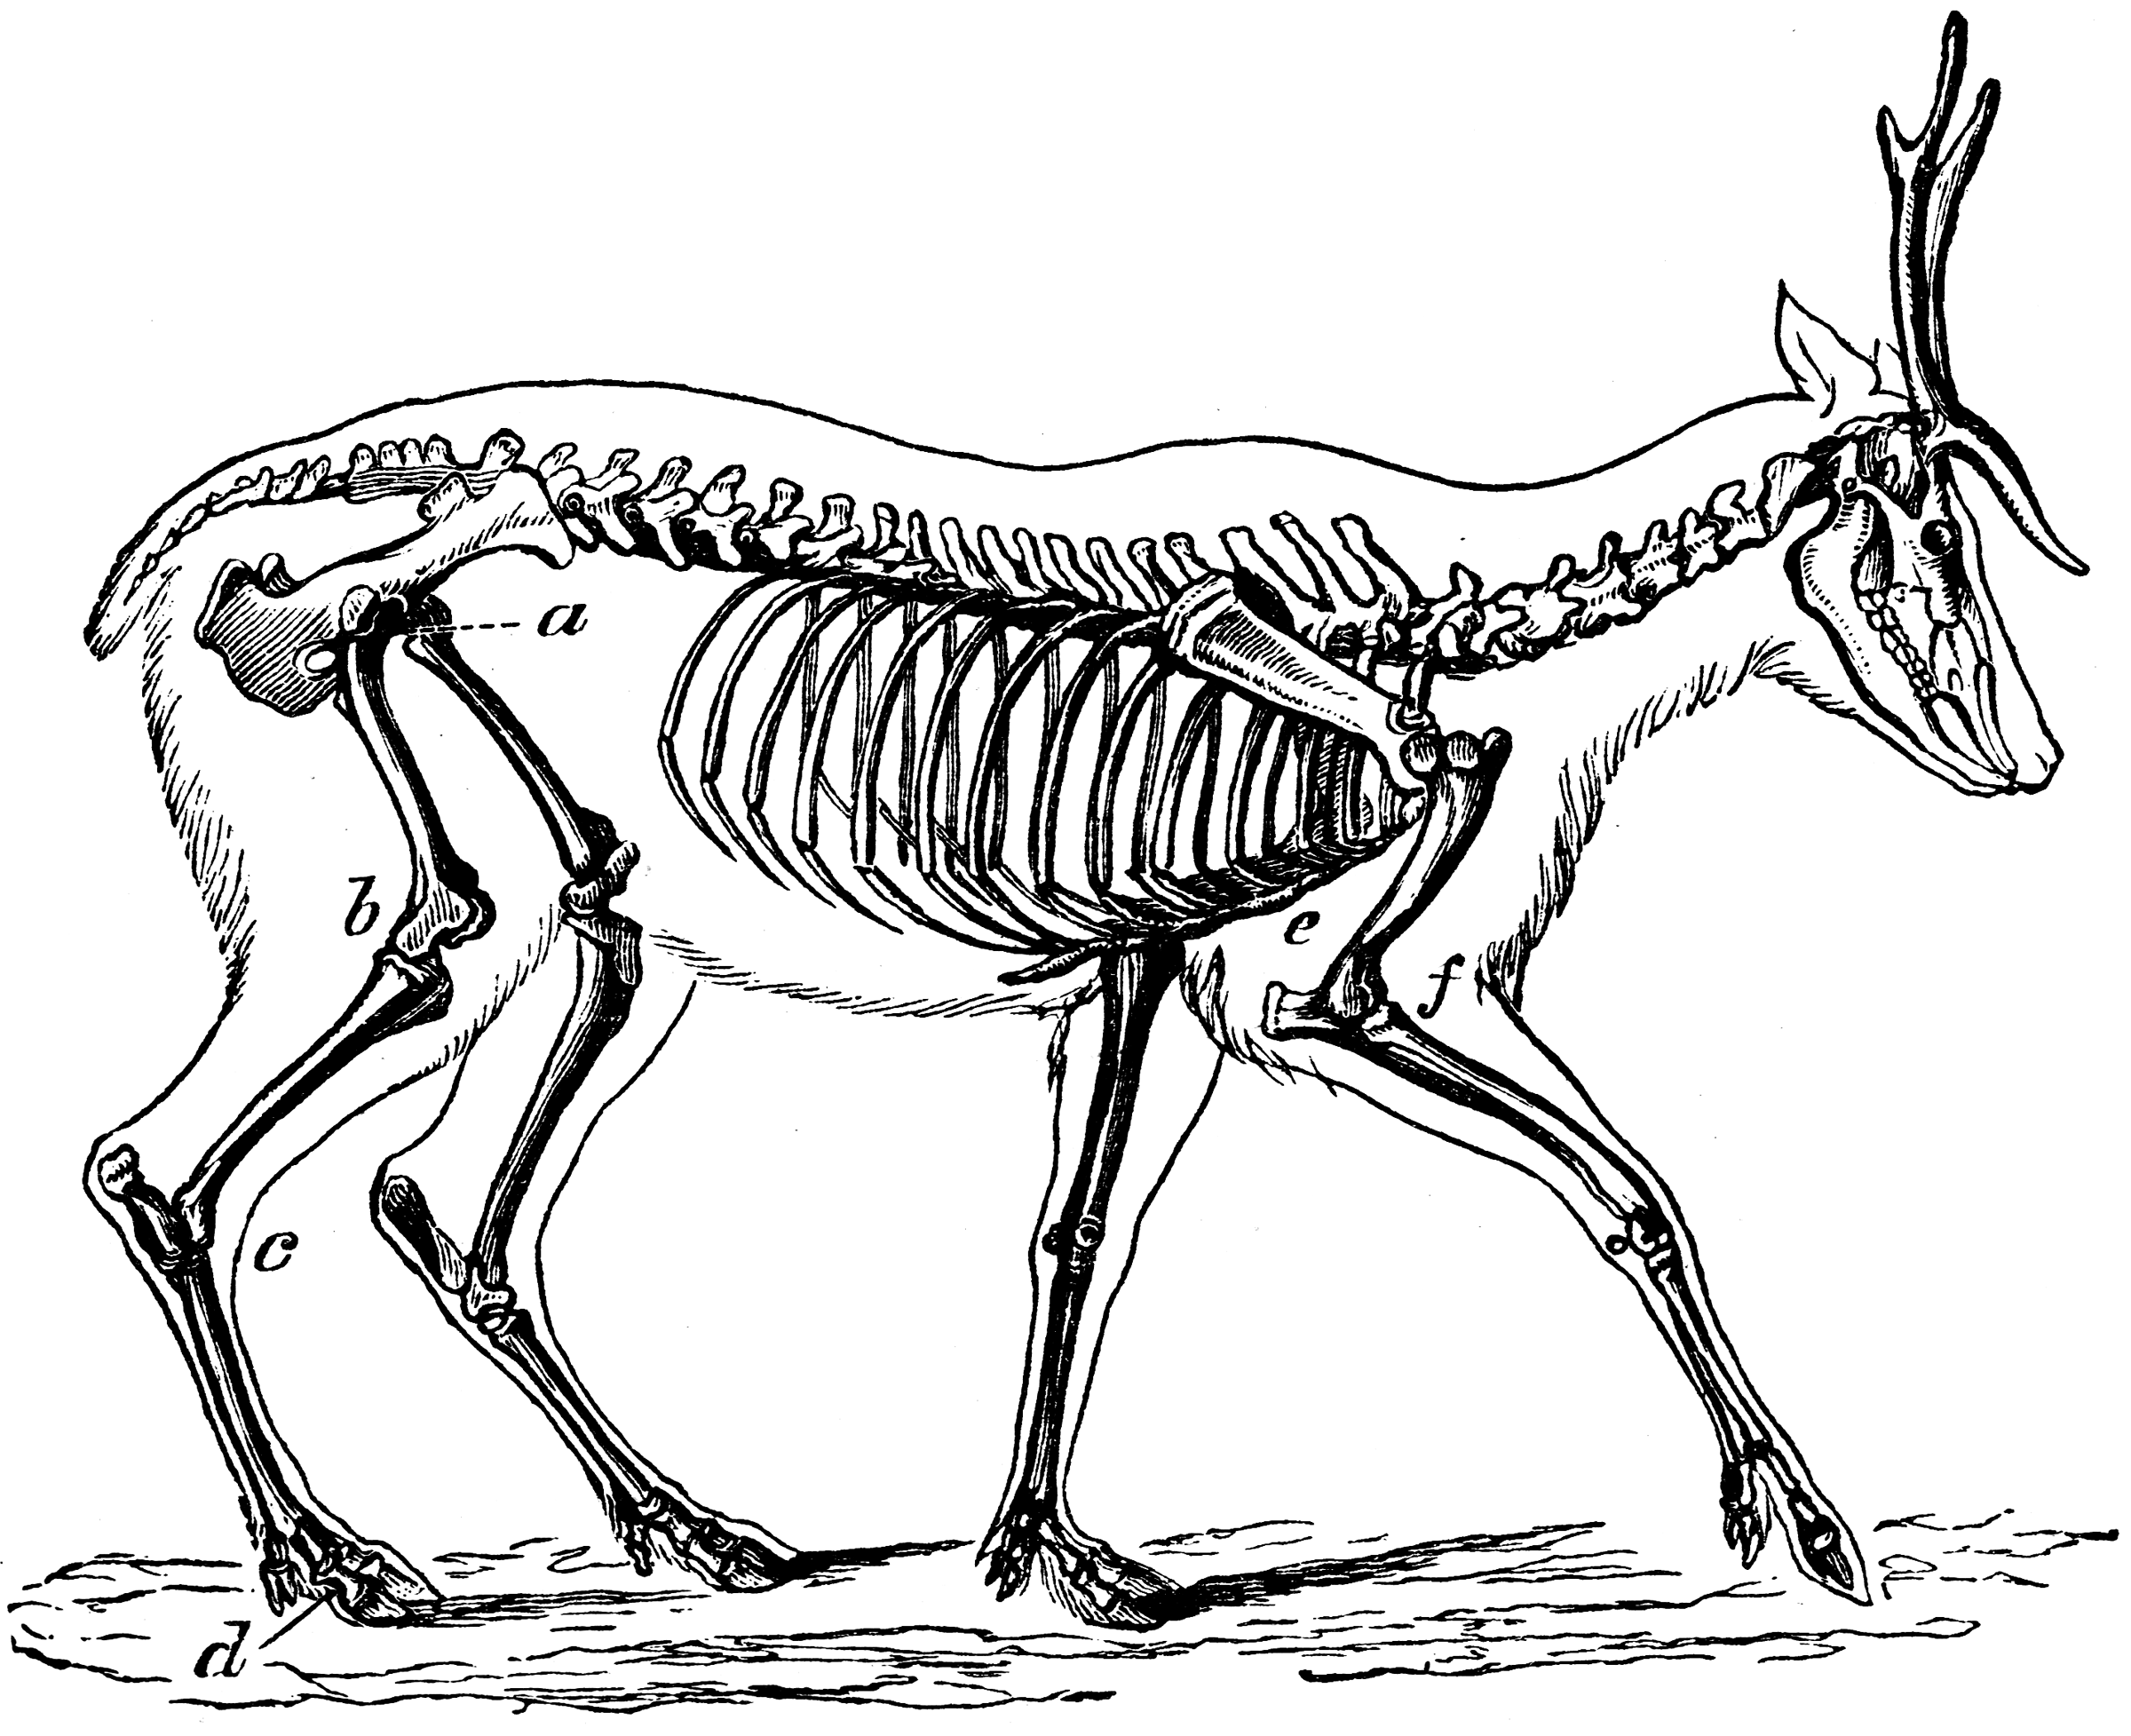 Skeleton of the Deer | ClipArt ETC